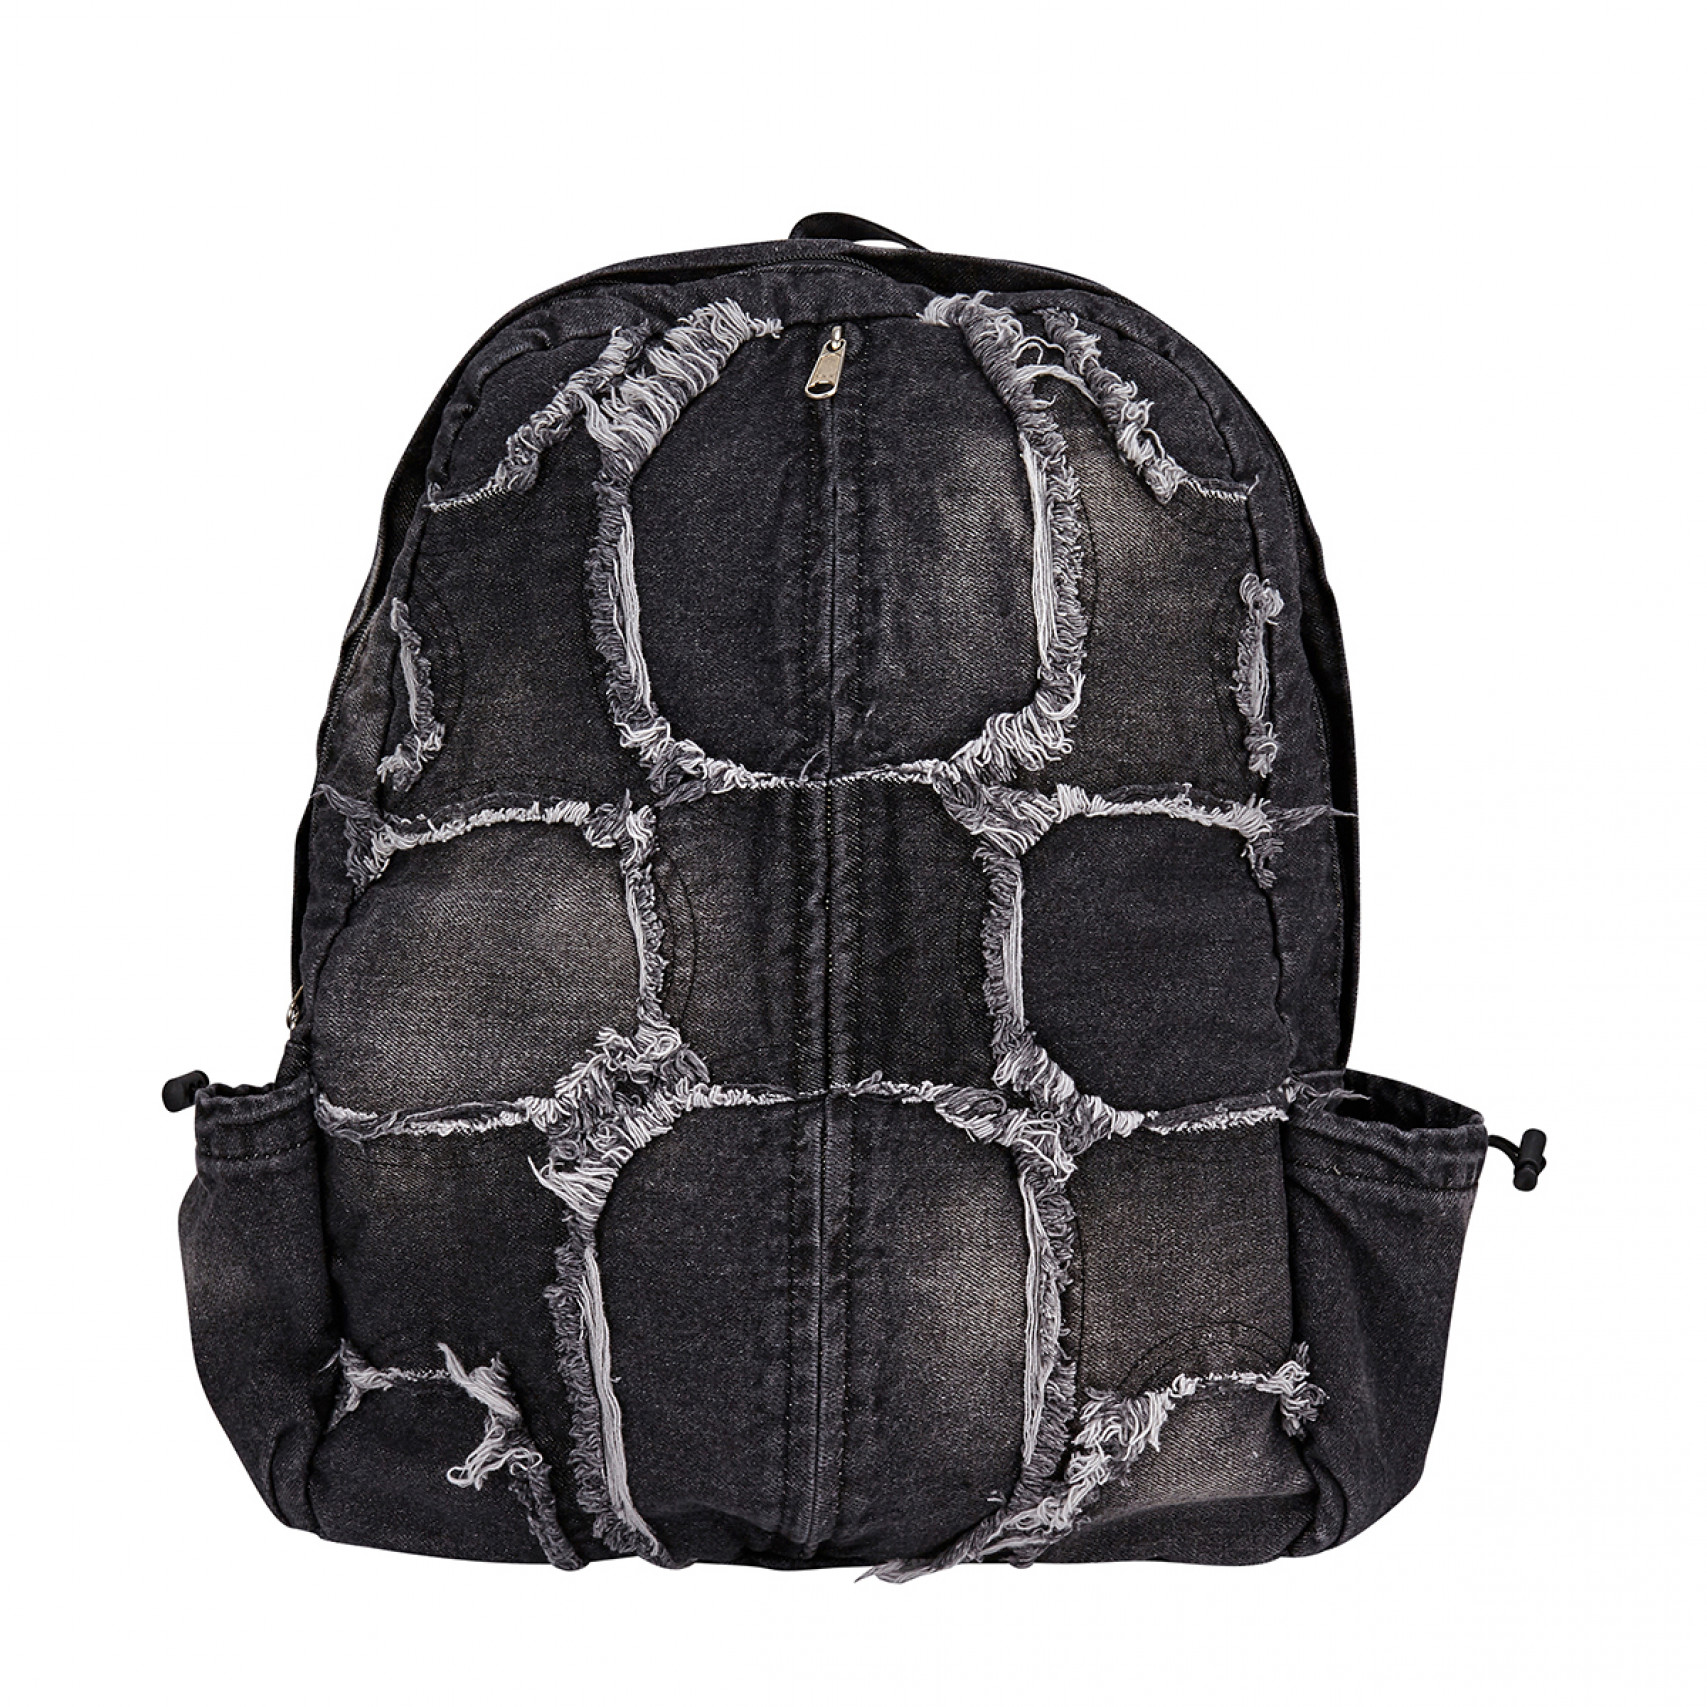 Washed Denim Turtle Backpack (Black) / IUG23B03BK